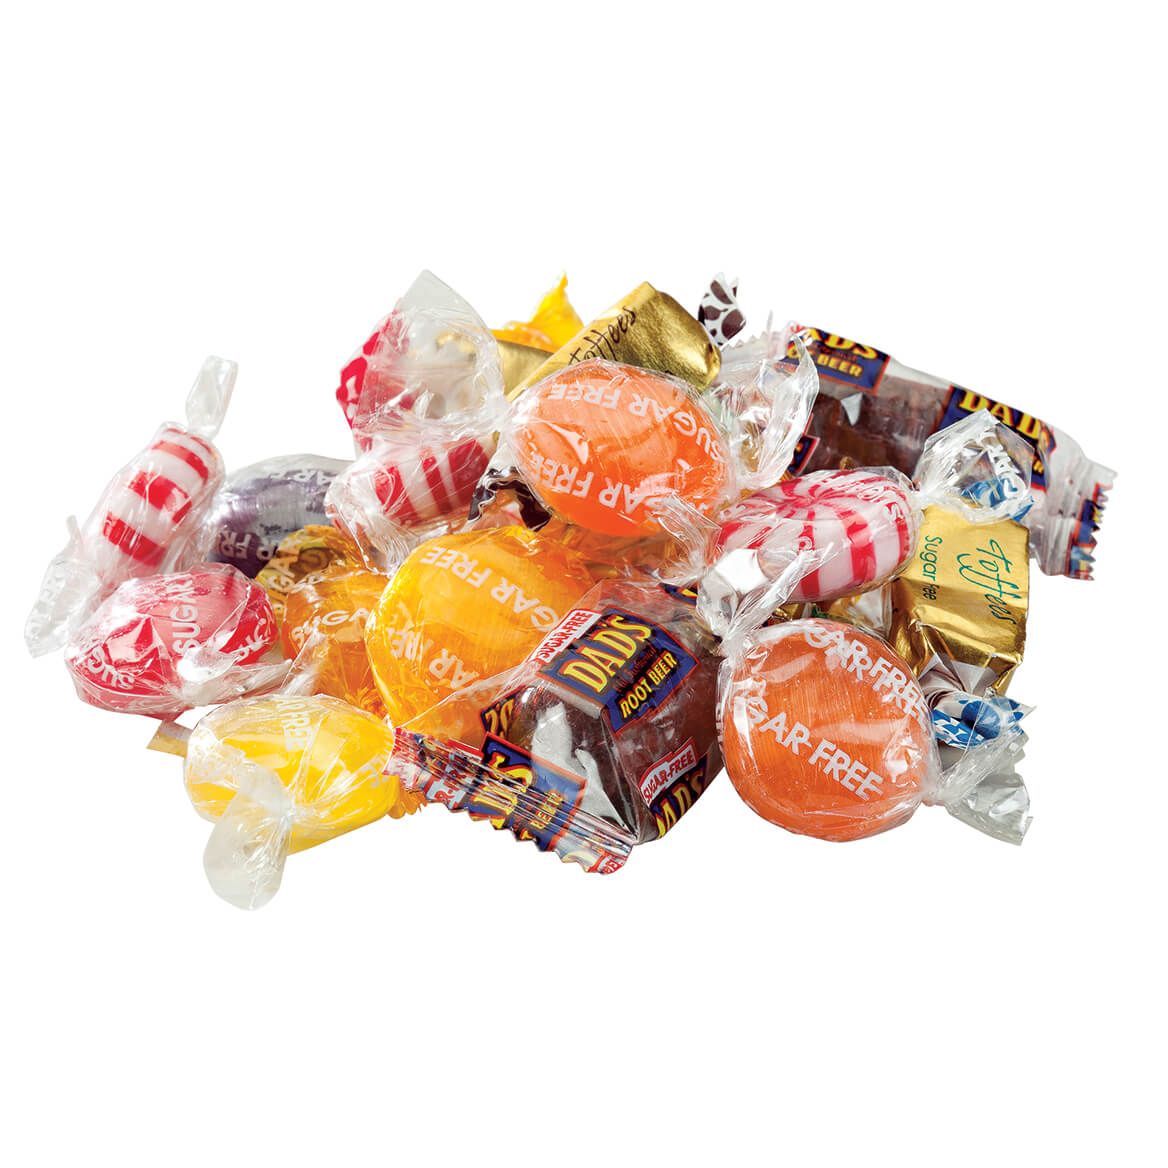 Mrs. Kimballs Candy Shoppe Sugar Free Nostalgic Candy Refill + '-' + 364292